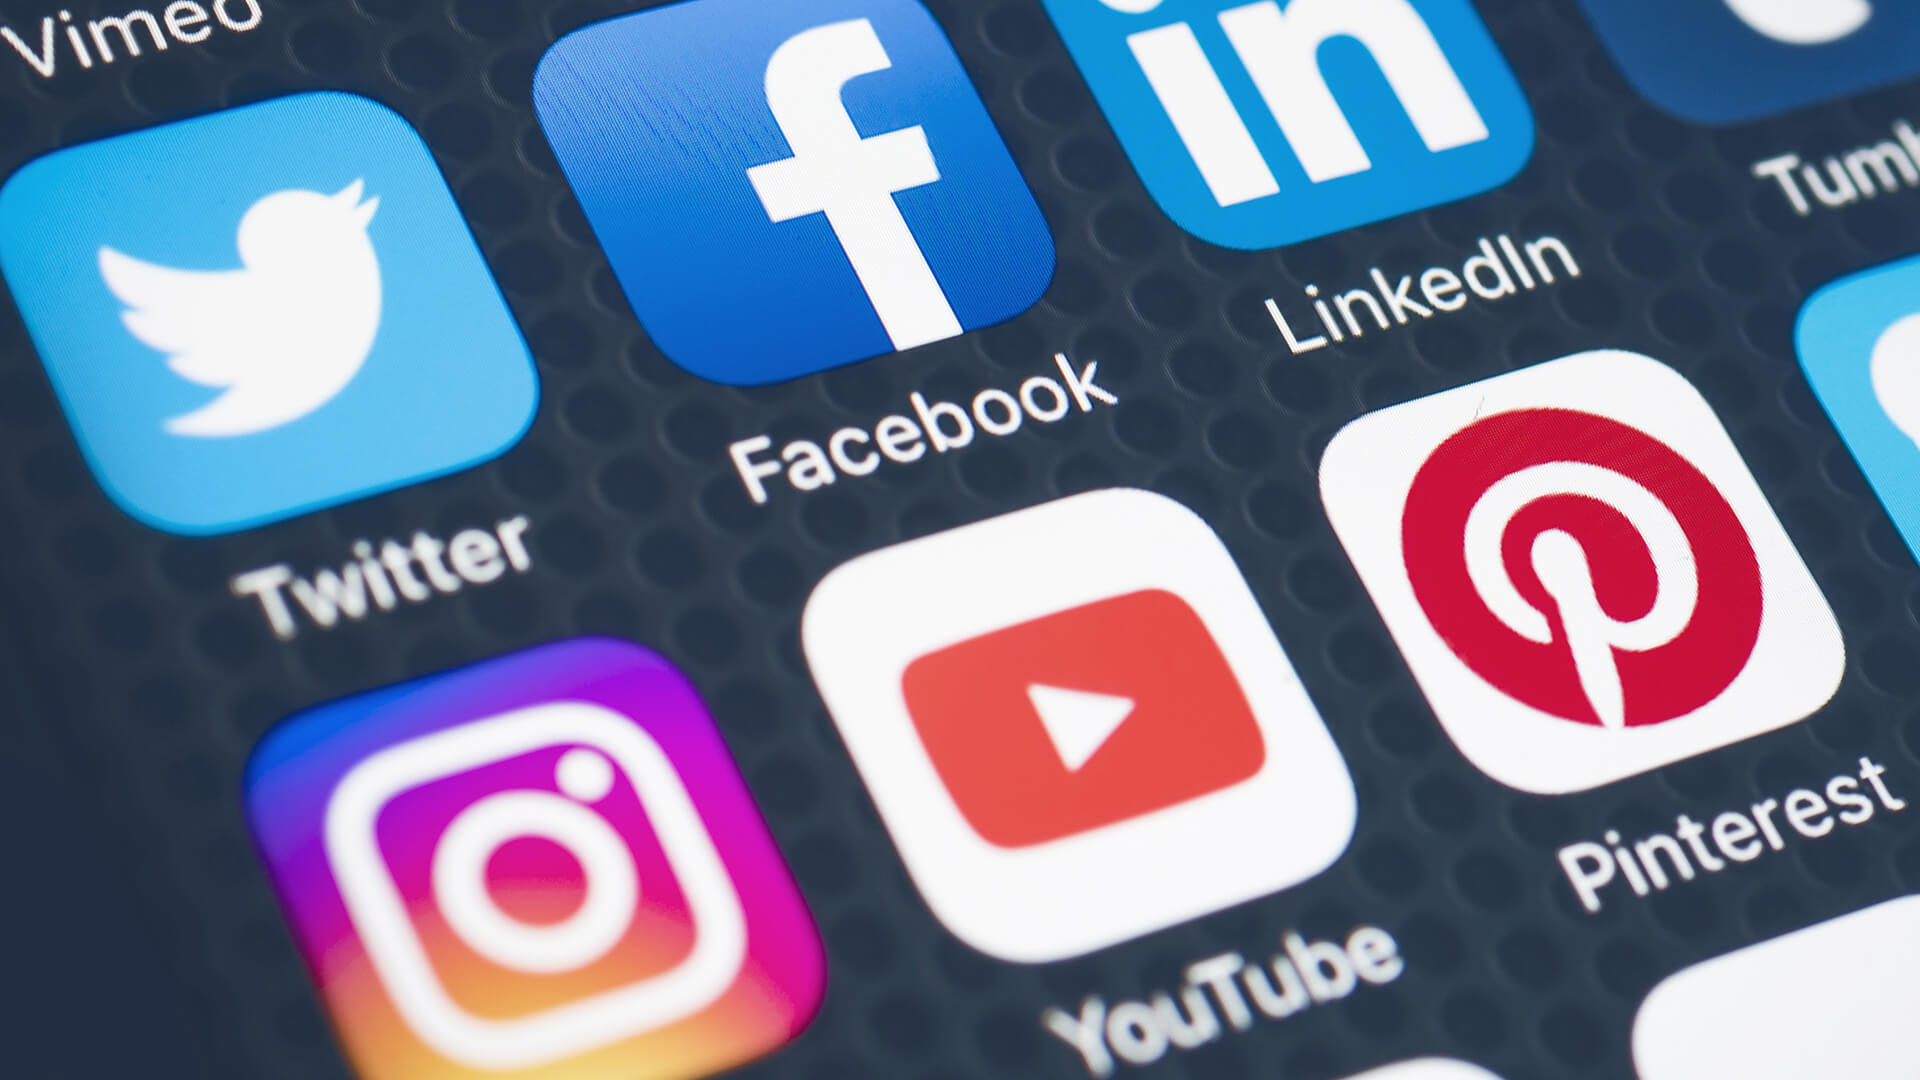 16 social media updates for marketers in 2019... so far